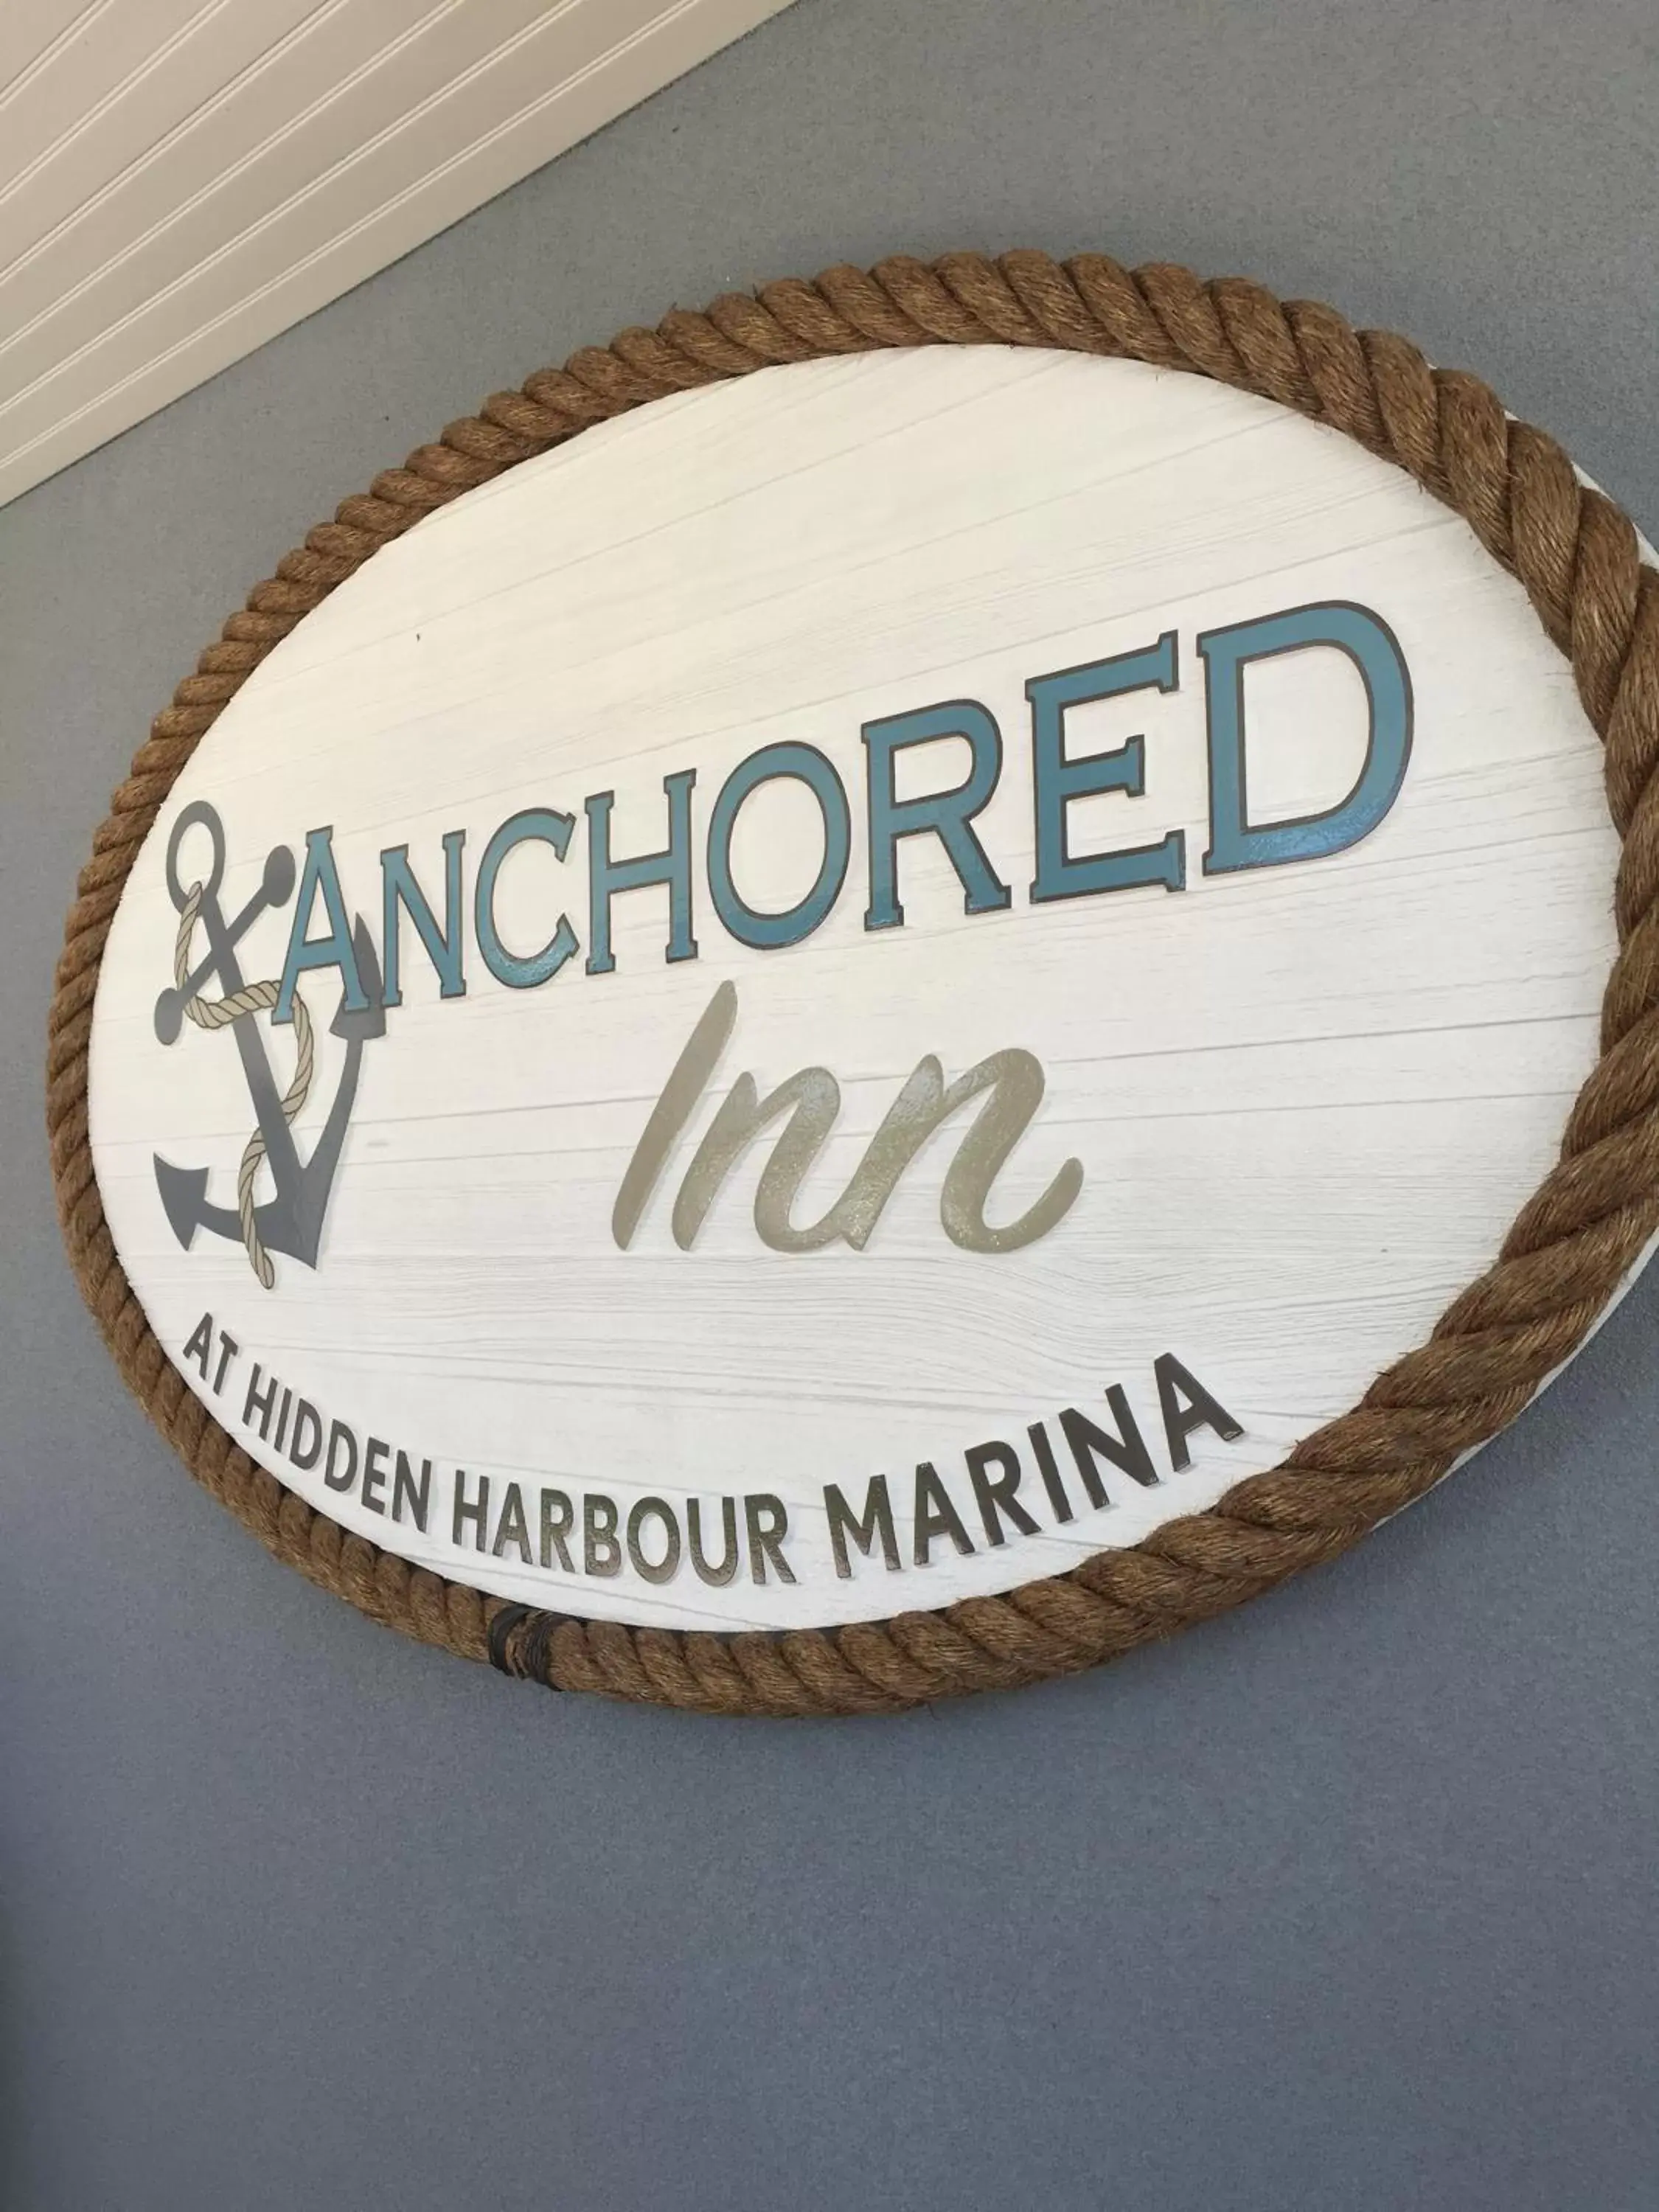 Property logo or sign in Anchored Inn at Hidden Harbor